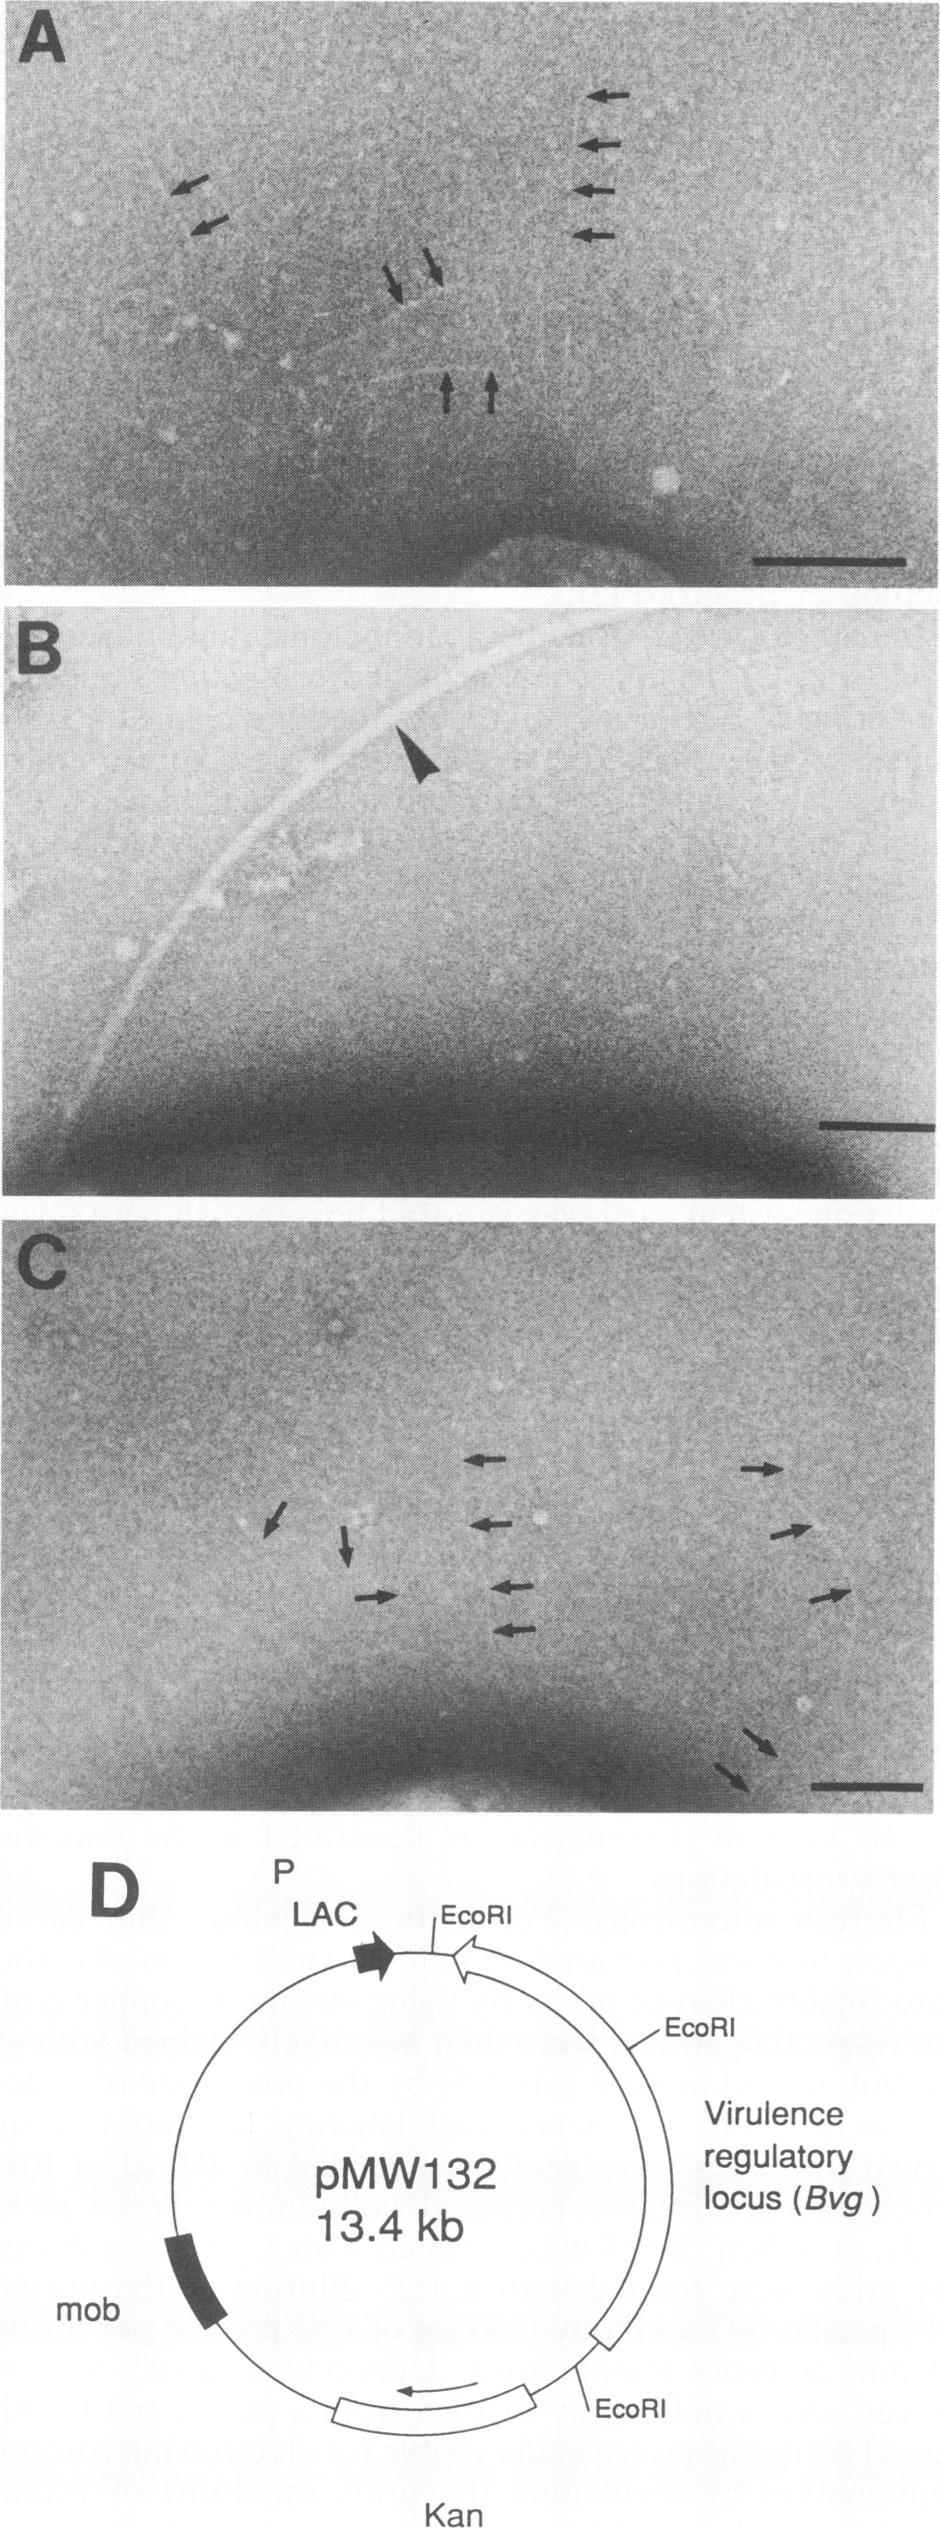 bronchiseptica ATCC 10580(pMW132) (C) is shown. Arrows indicate fimbriae, while the arrowhead indicates a flagellum. Bar, 0.1 pmr.